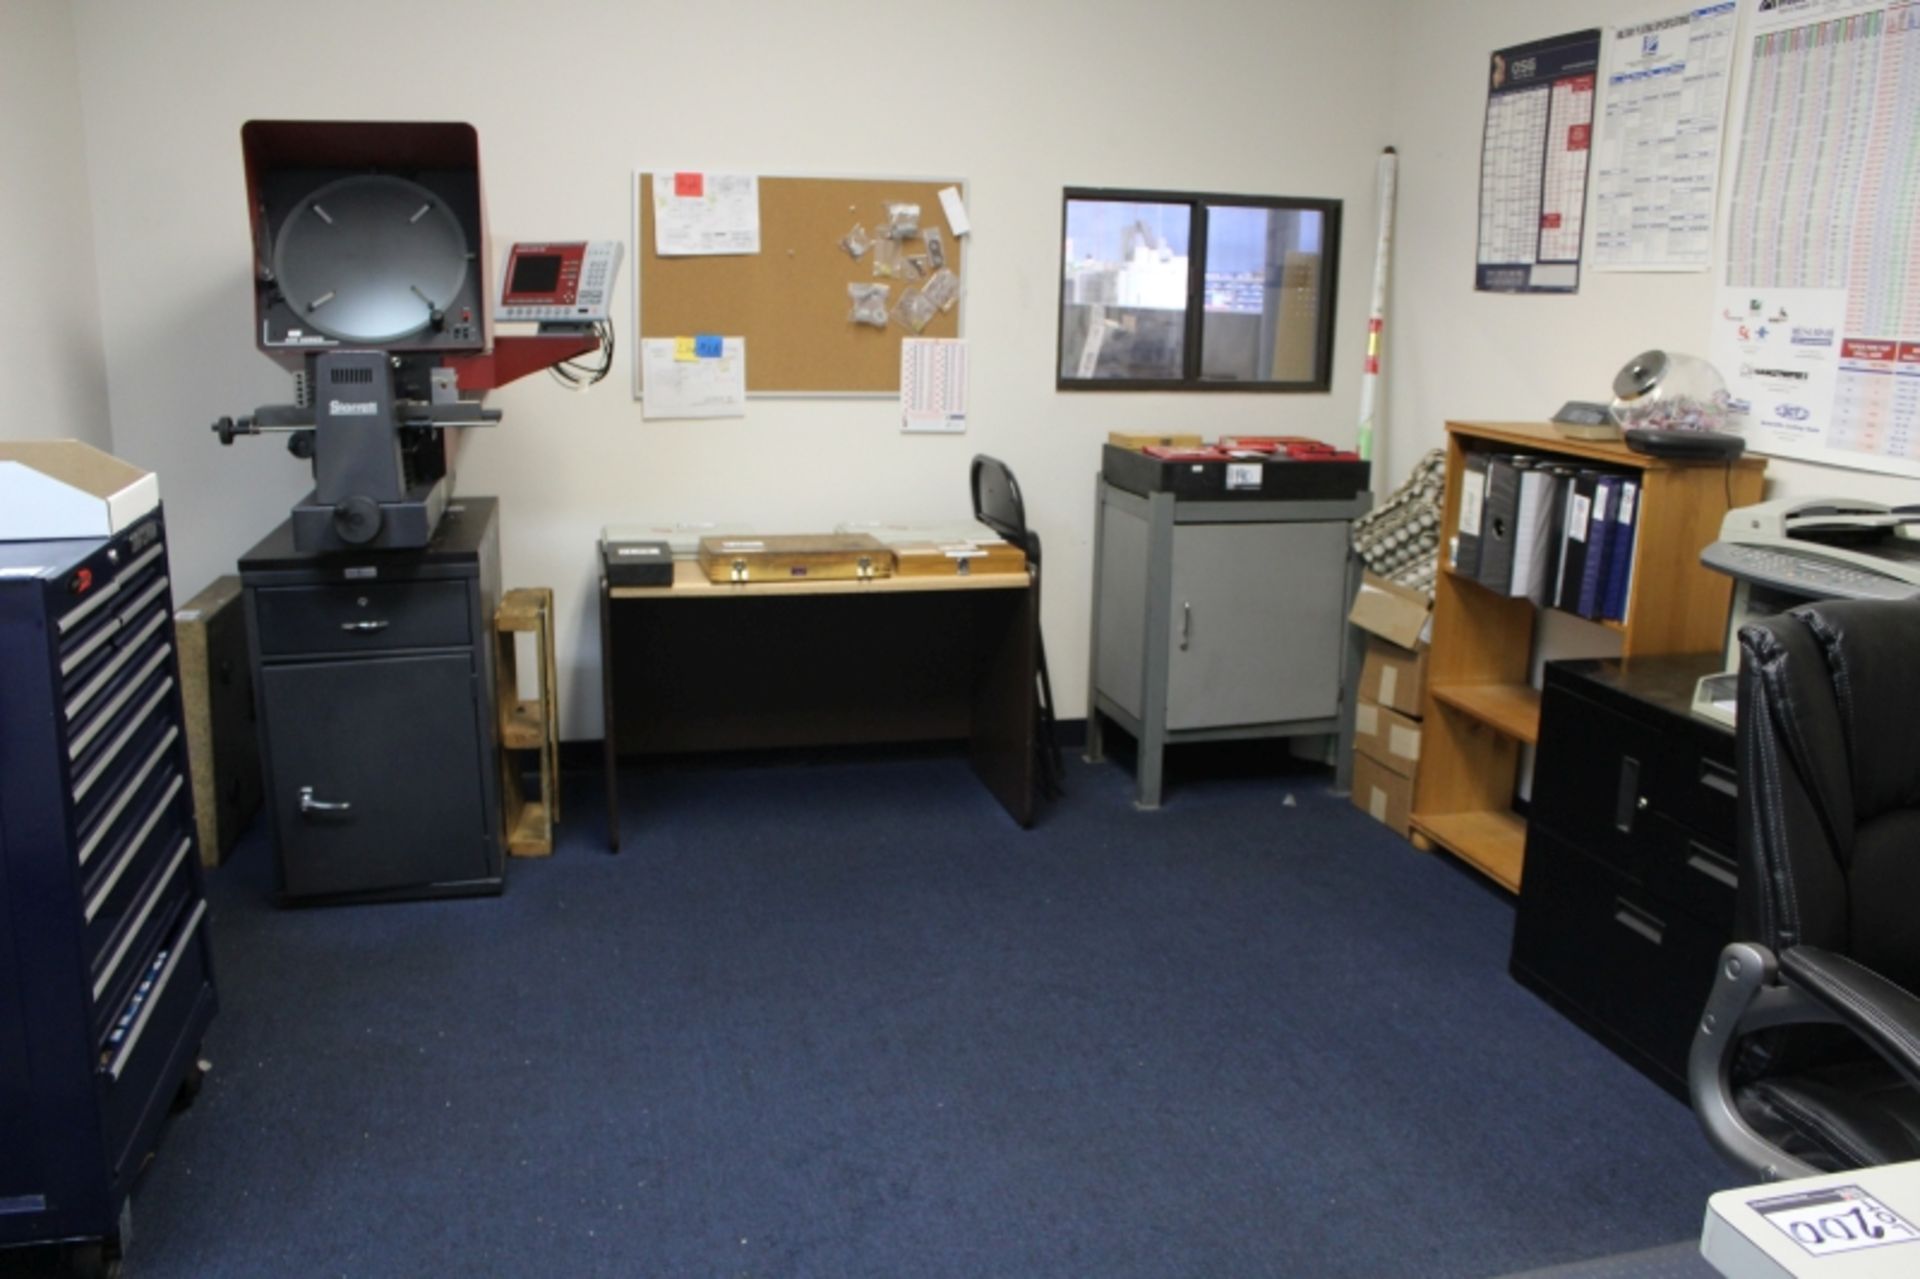 Room Content, Desks, Chairs, Bookshelf (No Computers Printers) - Image 2 of 4